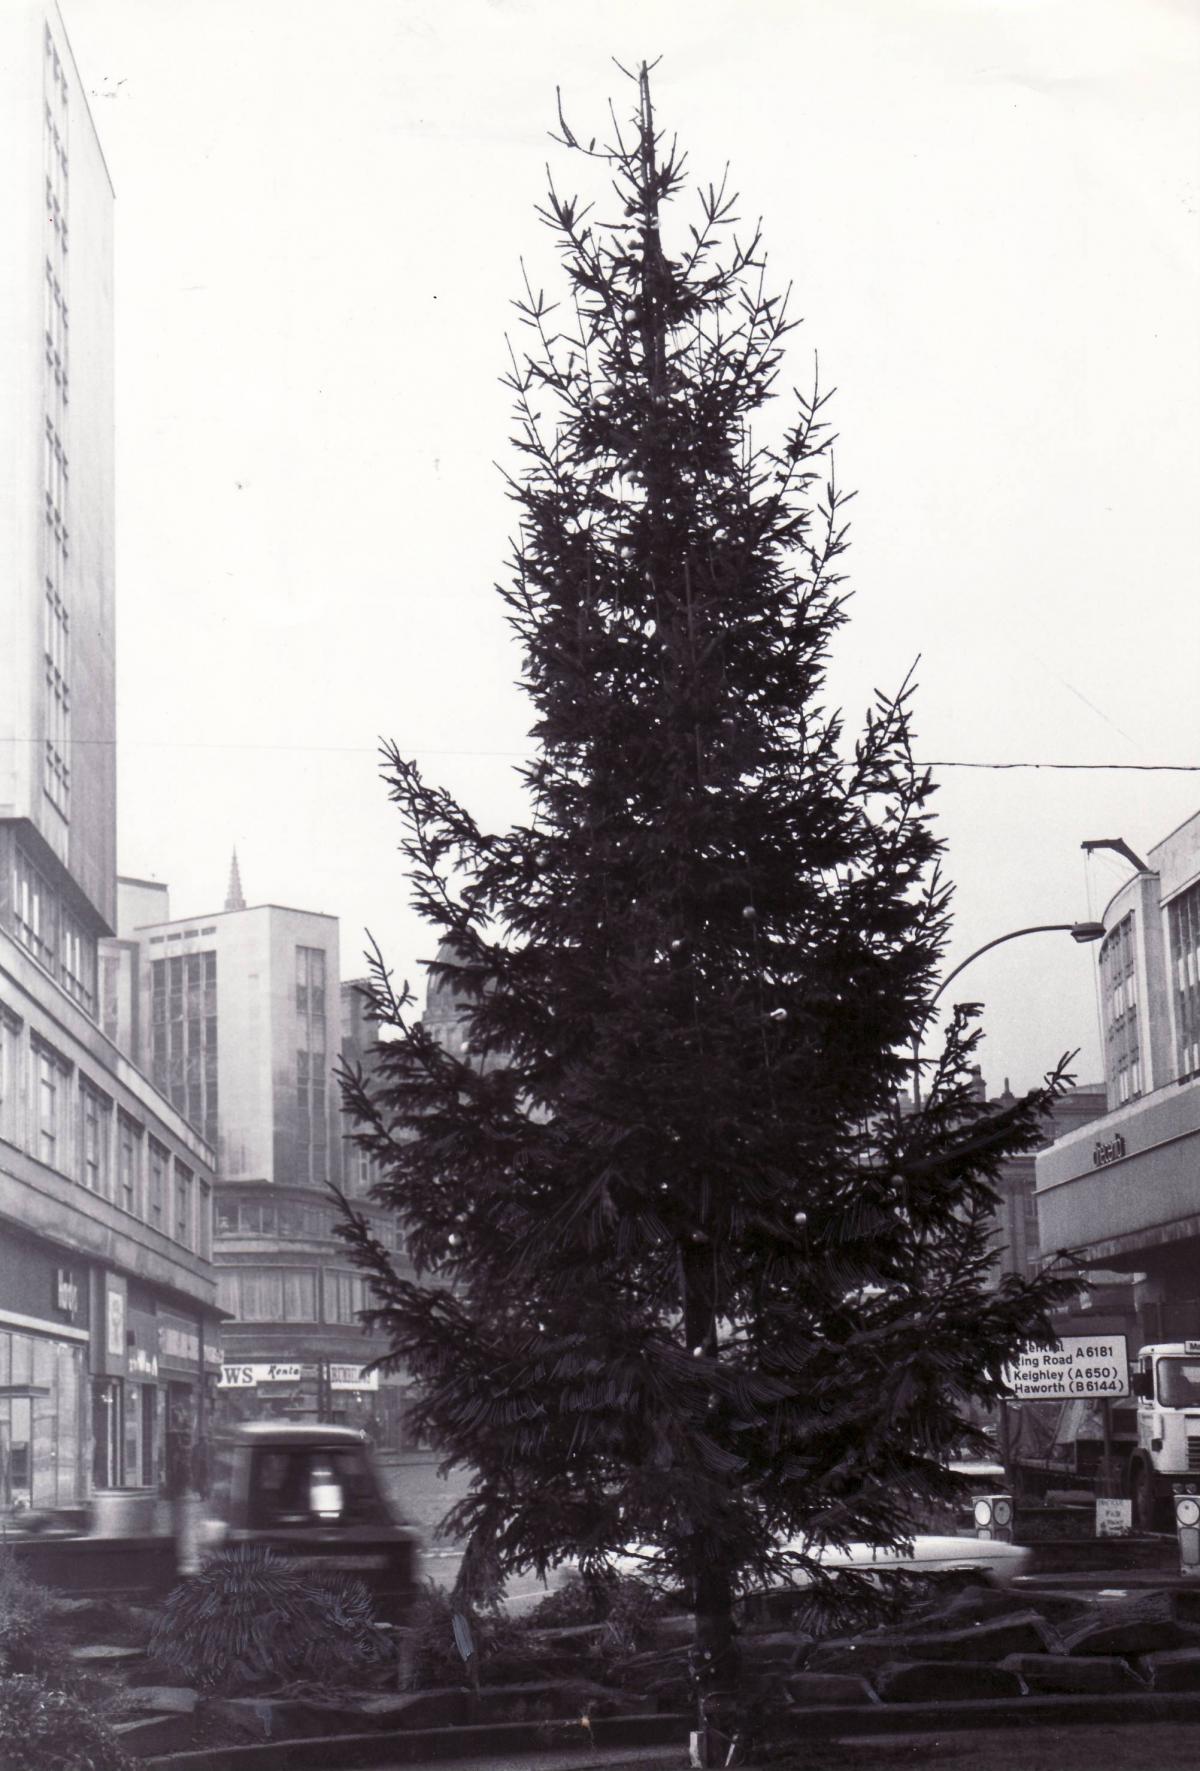 Bradford's Christmas tree in Broadway in 1979